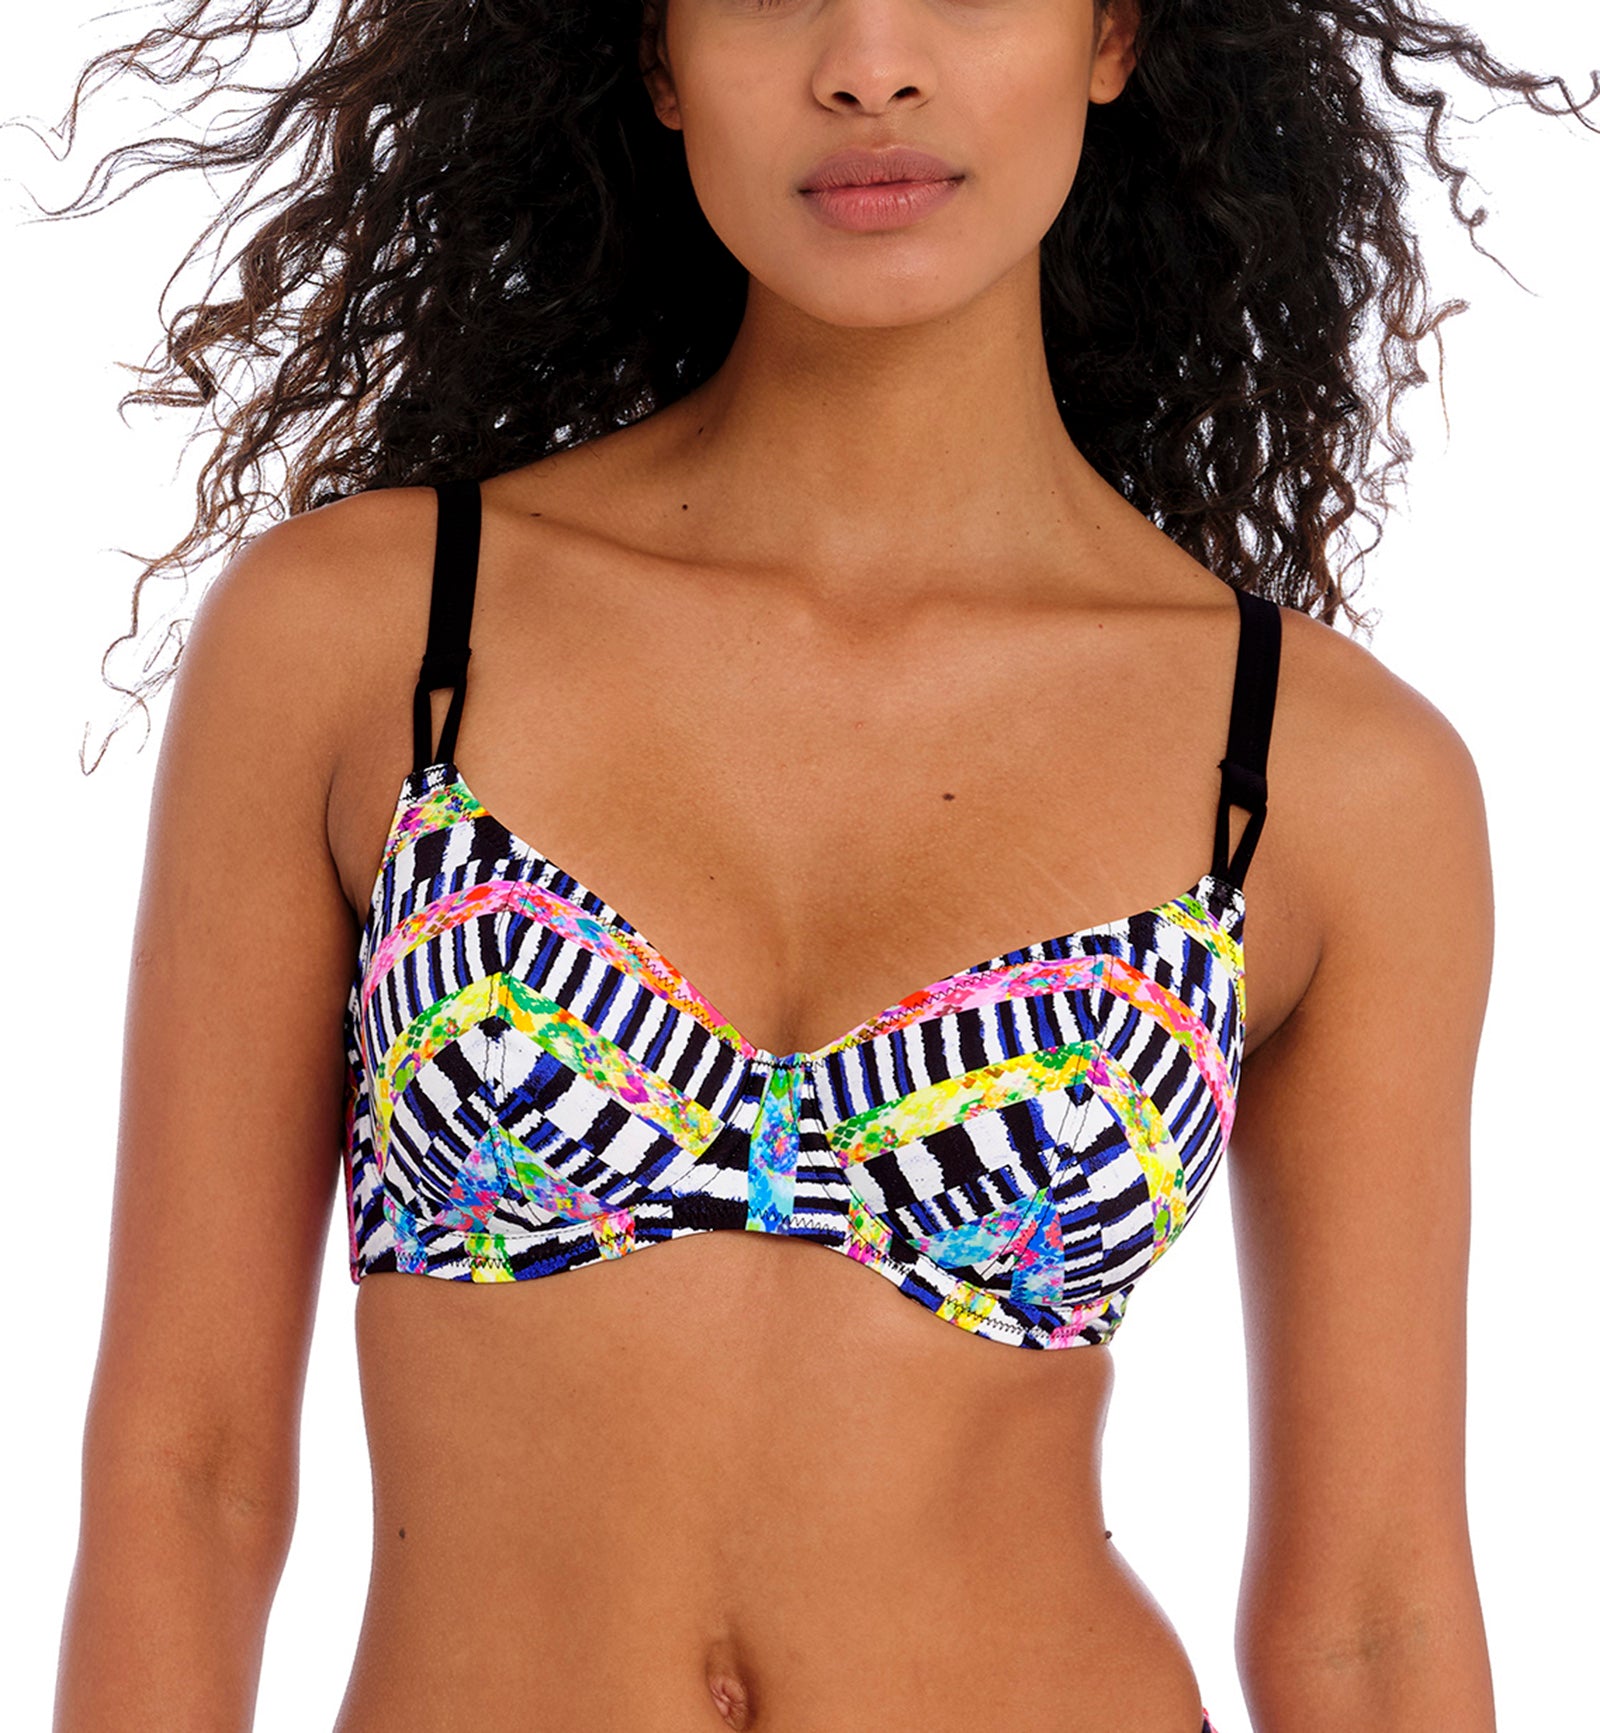 Freya Electro Rave Underwire Plunge Bikini Top (204202),28G,Multi - Multi,28G